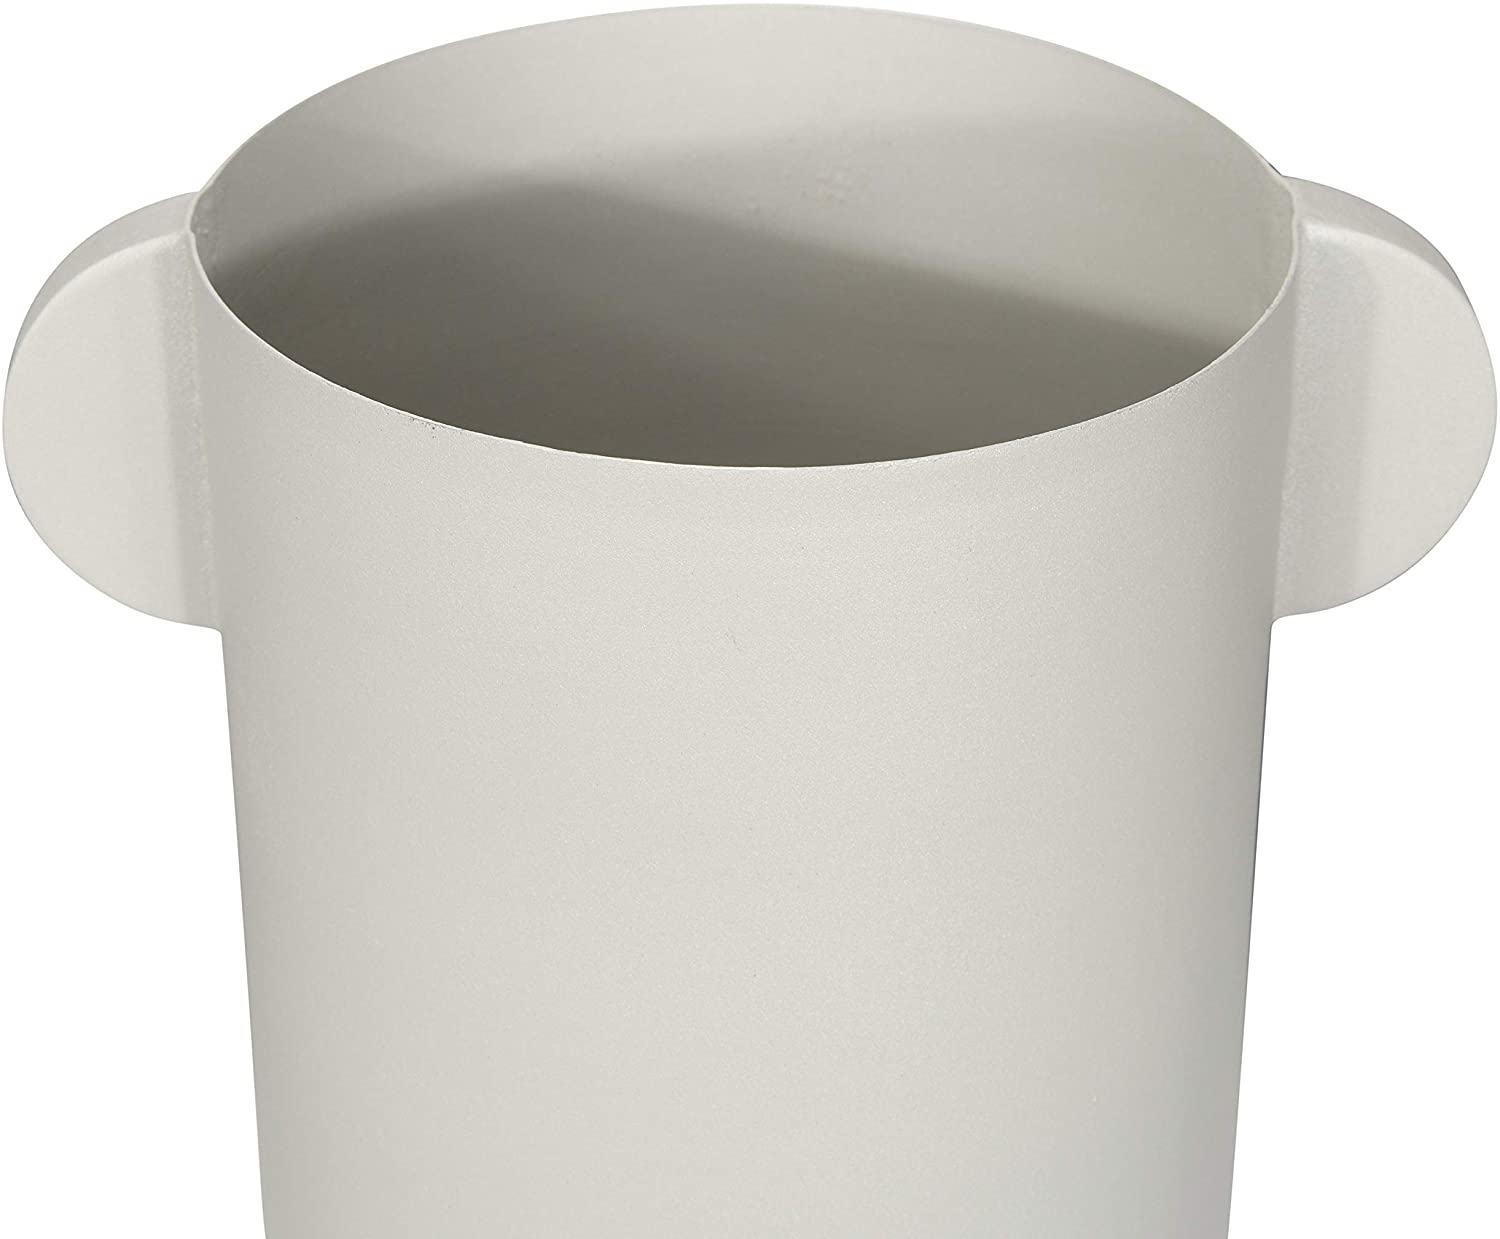 Metal Vase with Handles, Matte Cream - Image 5